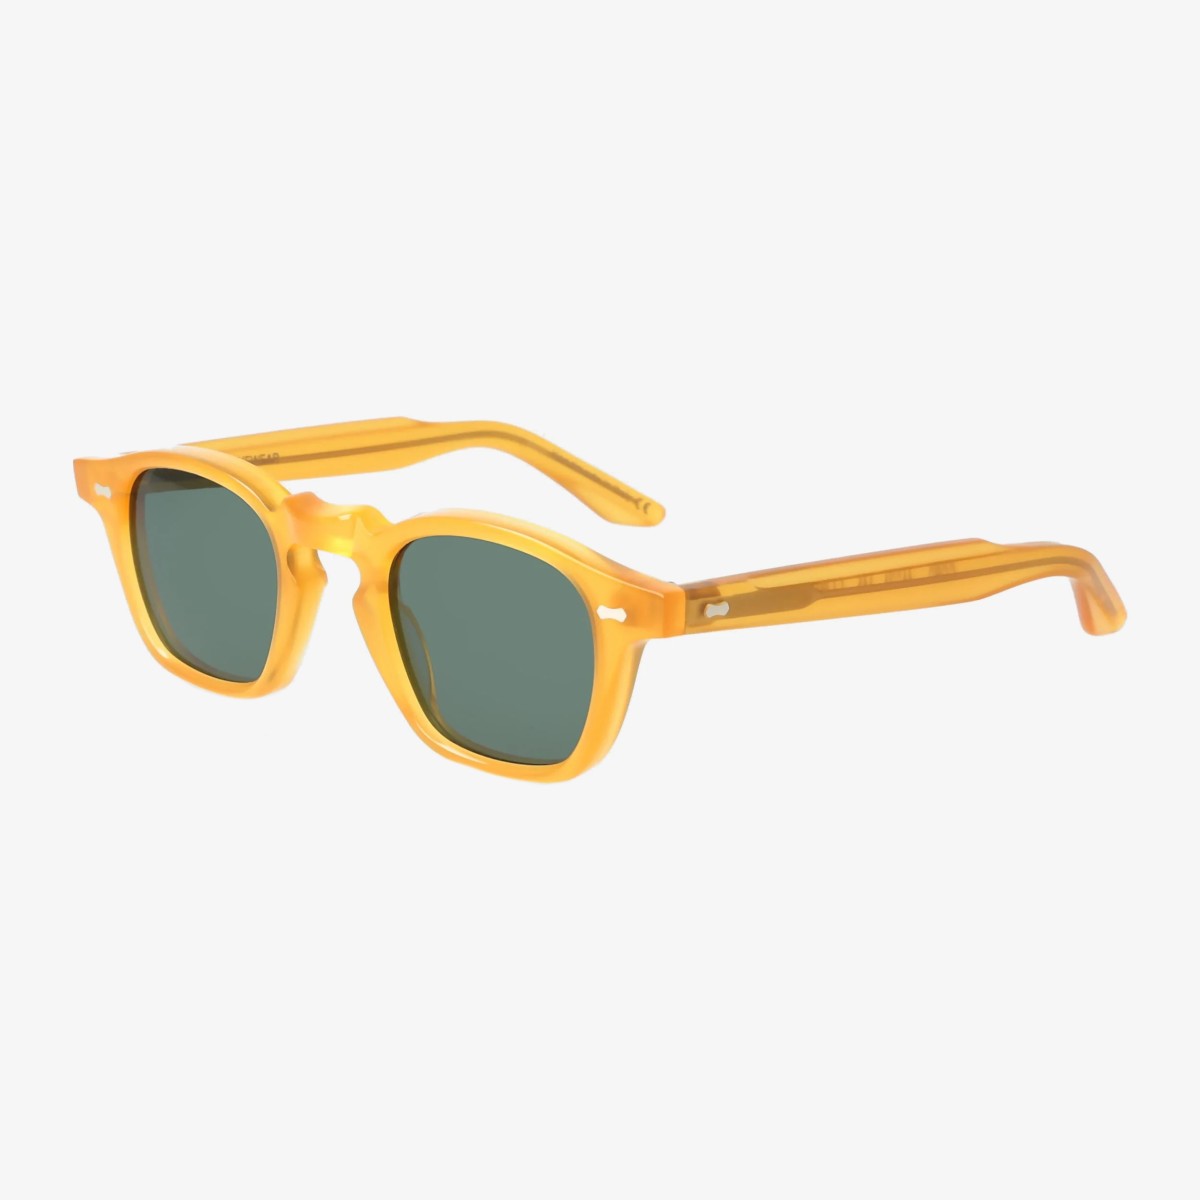 TBD Eyewear Cord yellow frame green lenses sunglasses